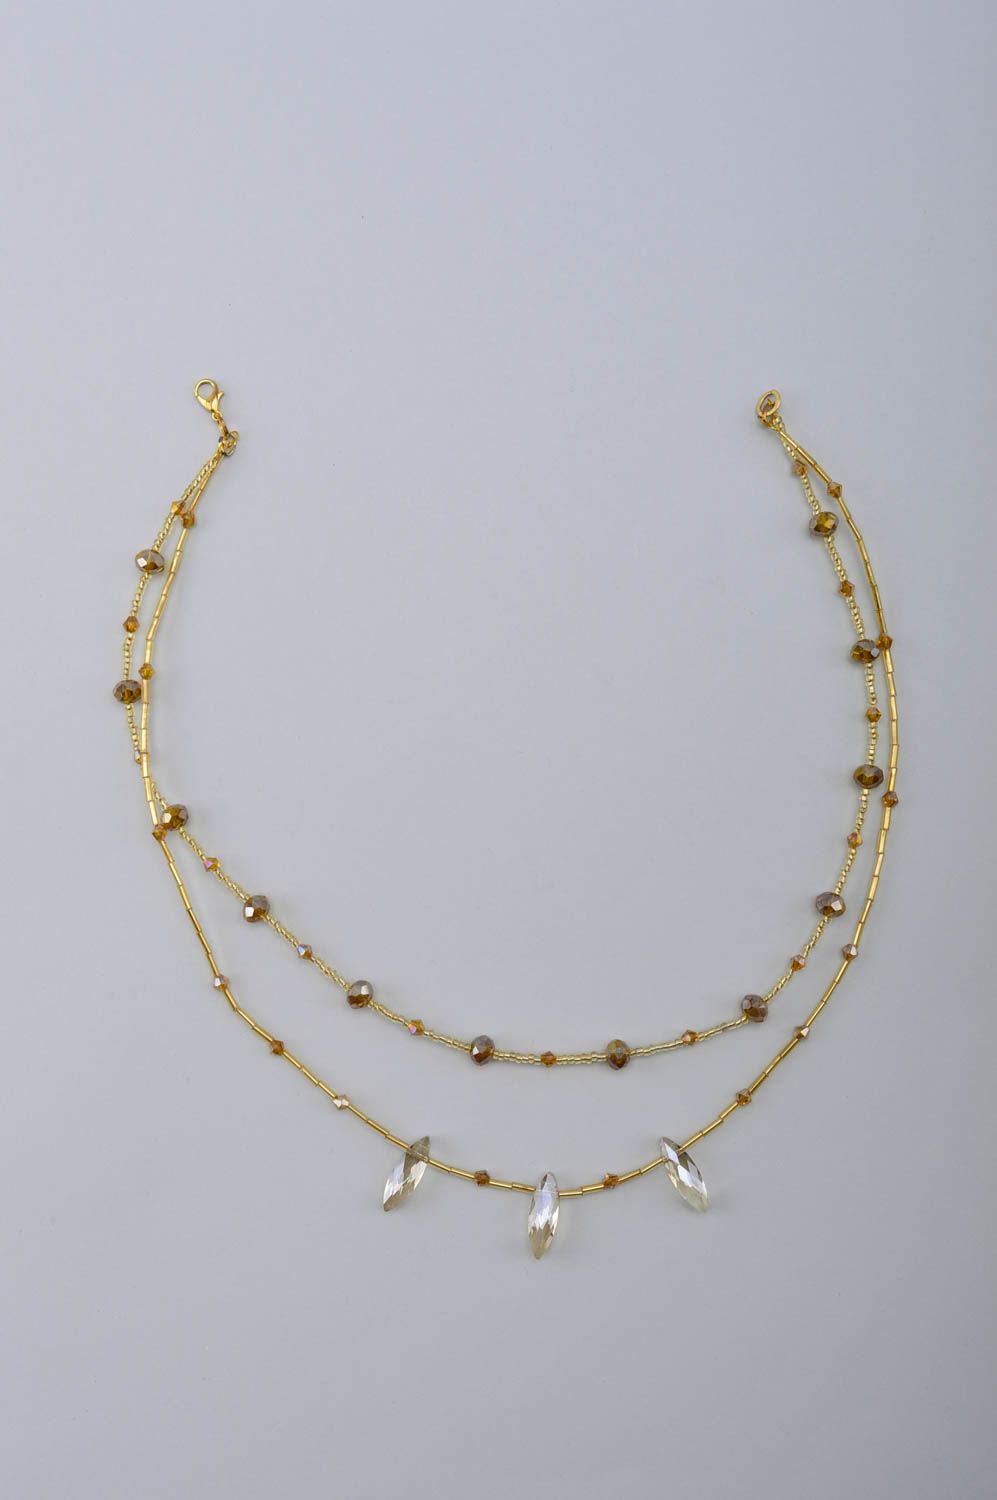 Unusual handmade beaded necklace design artisan jewelry fashion accessories photo 5